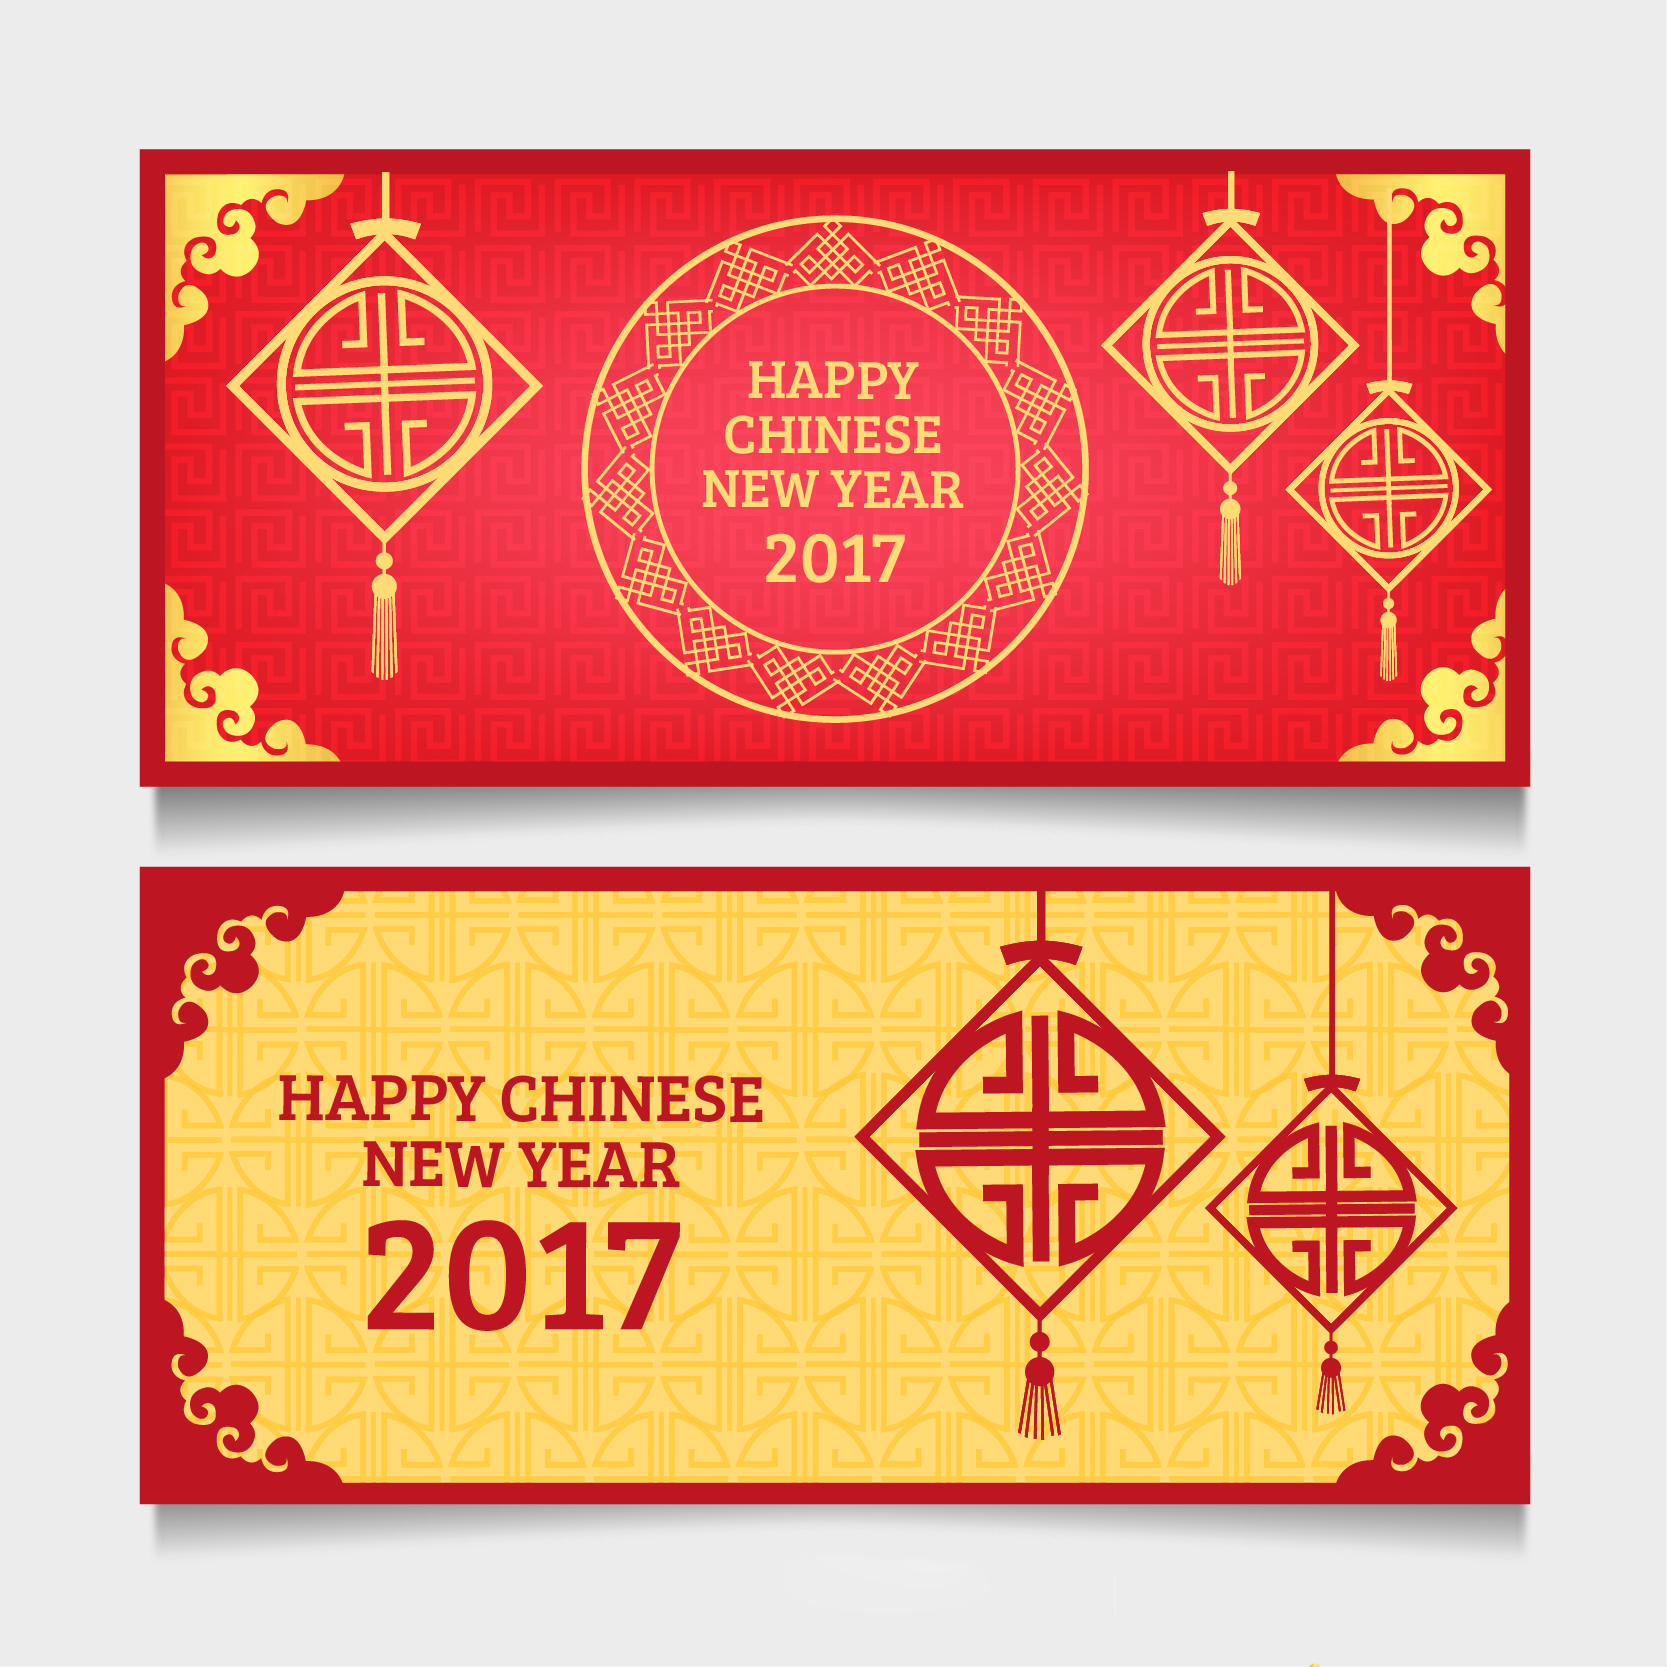 2019新年农历猪年贺卡矢量素材模板 2019 New Year Lunar Year Of The Pig Greeting Card Vector Material Template插图1